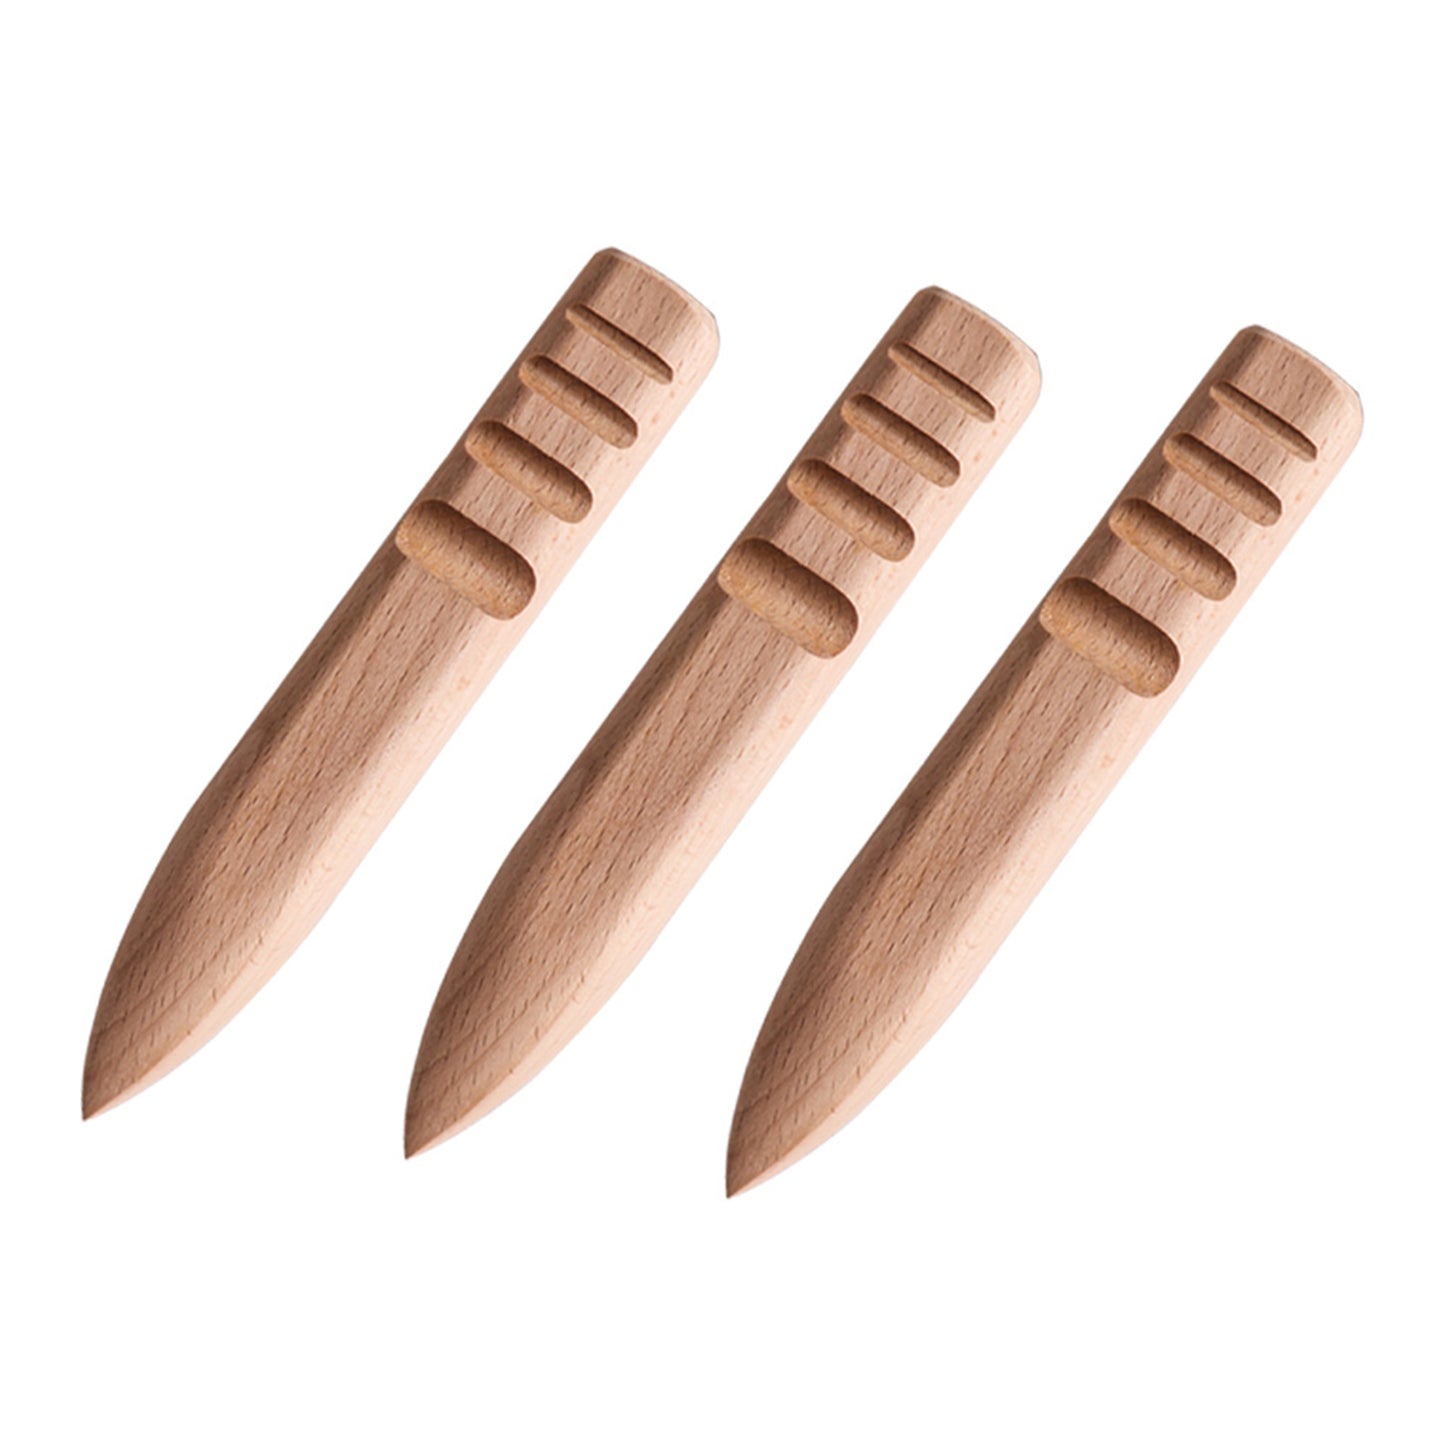 WUTA NEW 1pcs Wood Leather Edge Burnisher Leathercraft Edge Slicker Polished Grinding Tools Smooth Grooves 3-Type Disponible